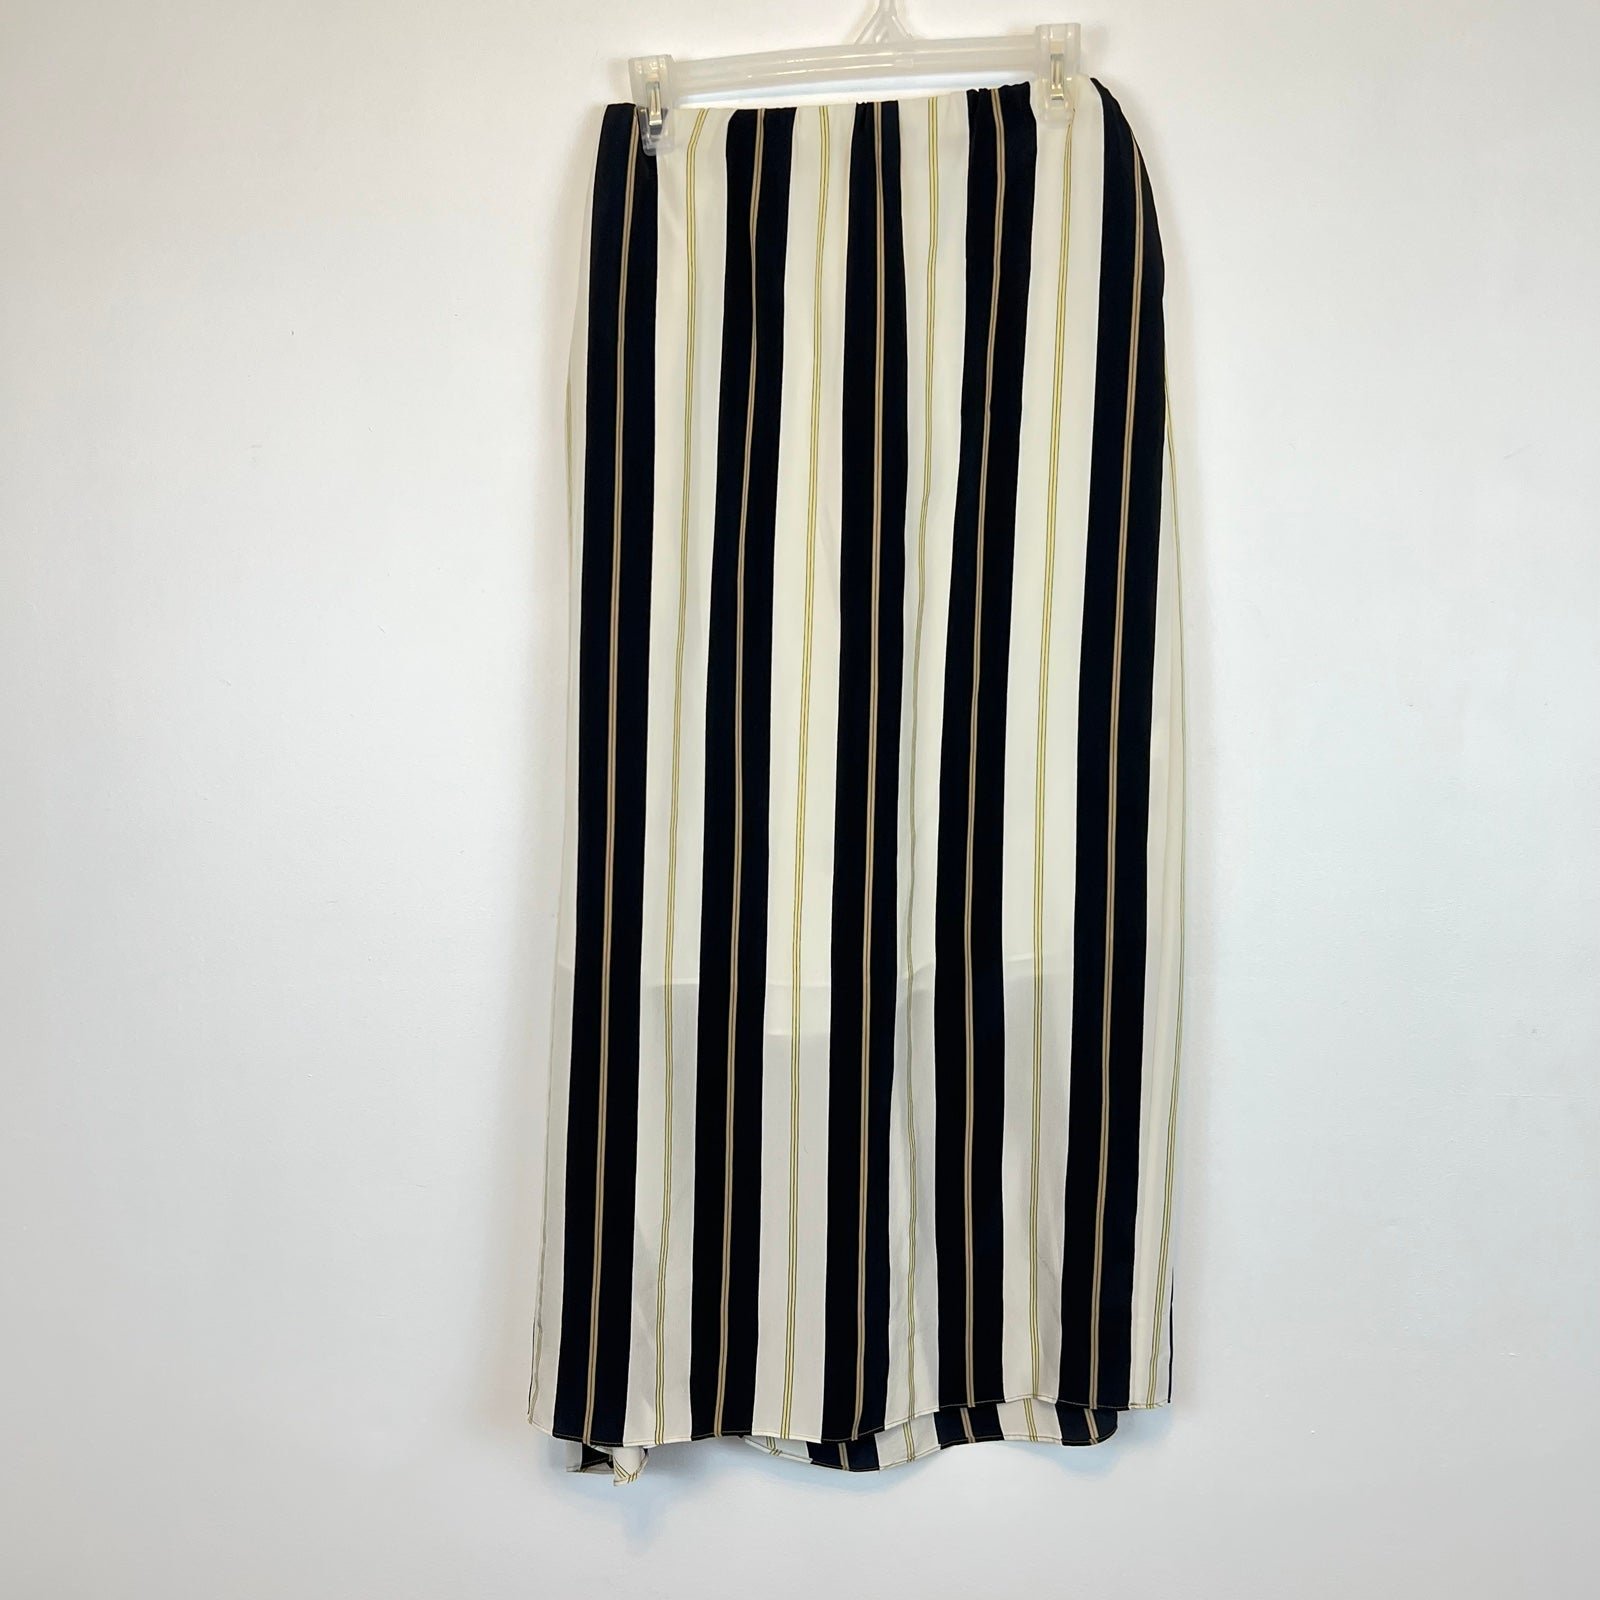 Authentic Tommy Bahama Striped 100% Silk Wrap Midi Skirt gT8a8fM1g Cheap